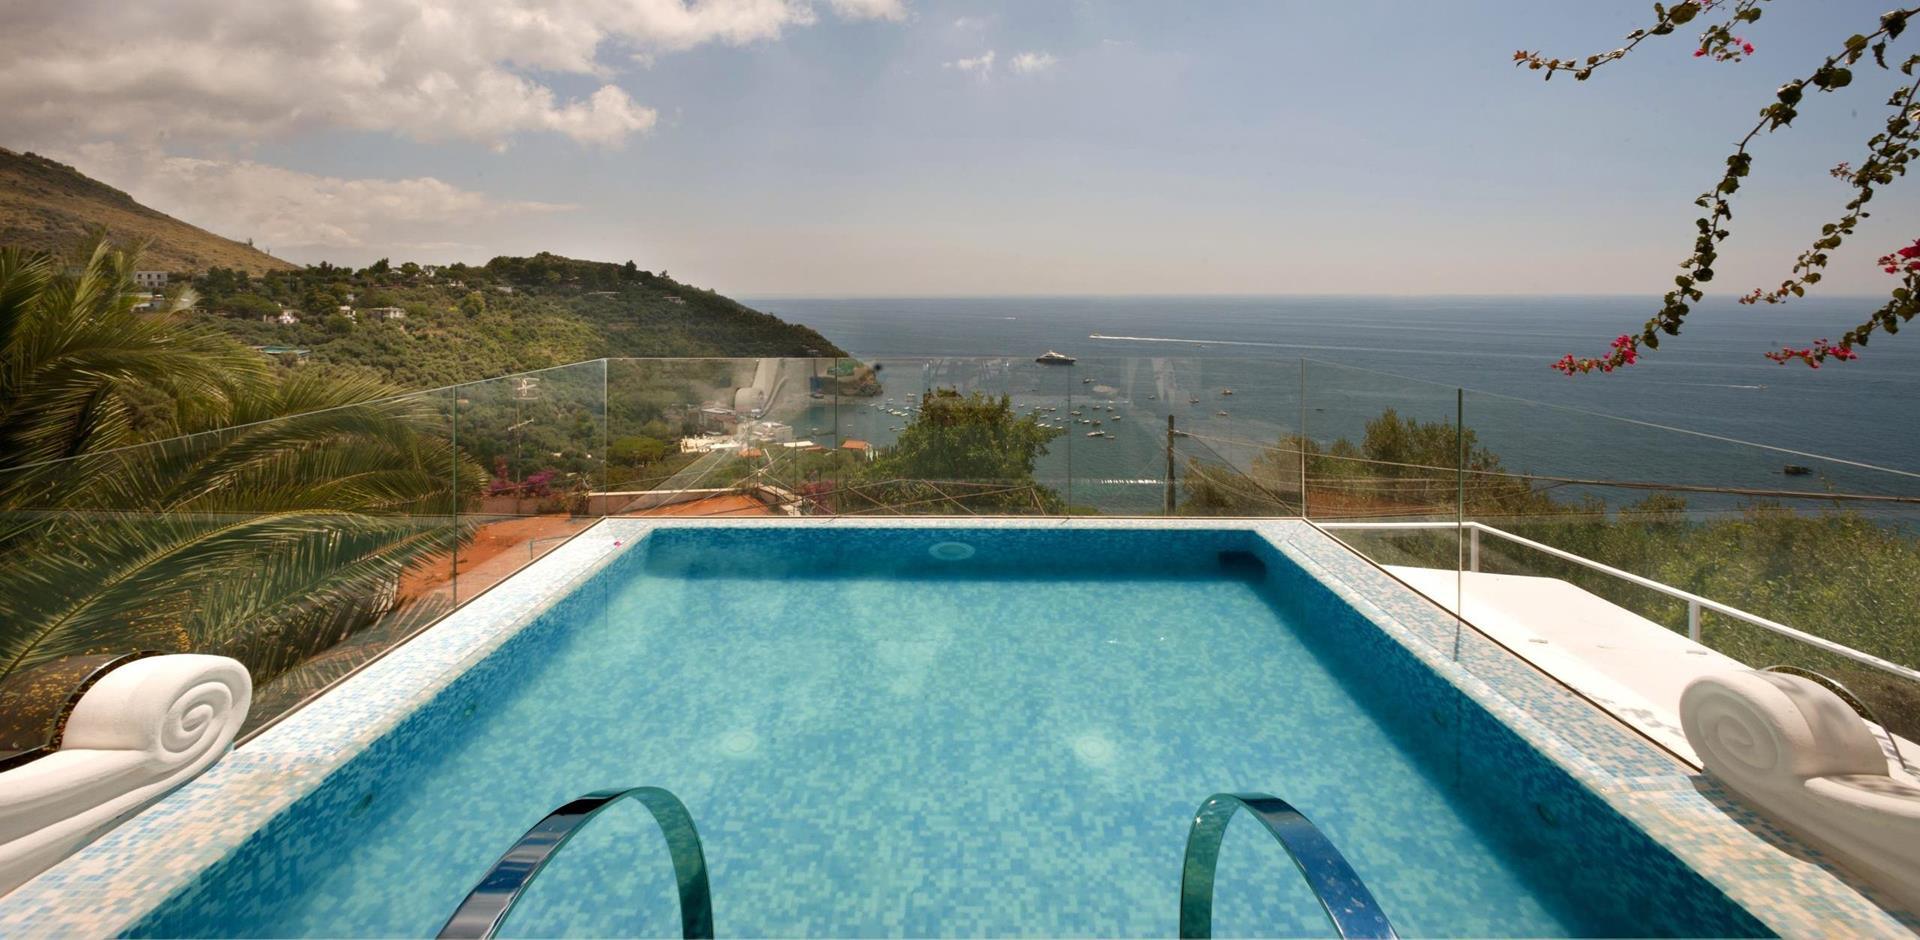 Pool, Villa Ponto, Amalfi, Italy